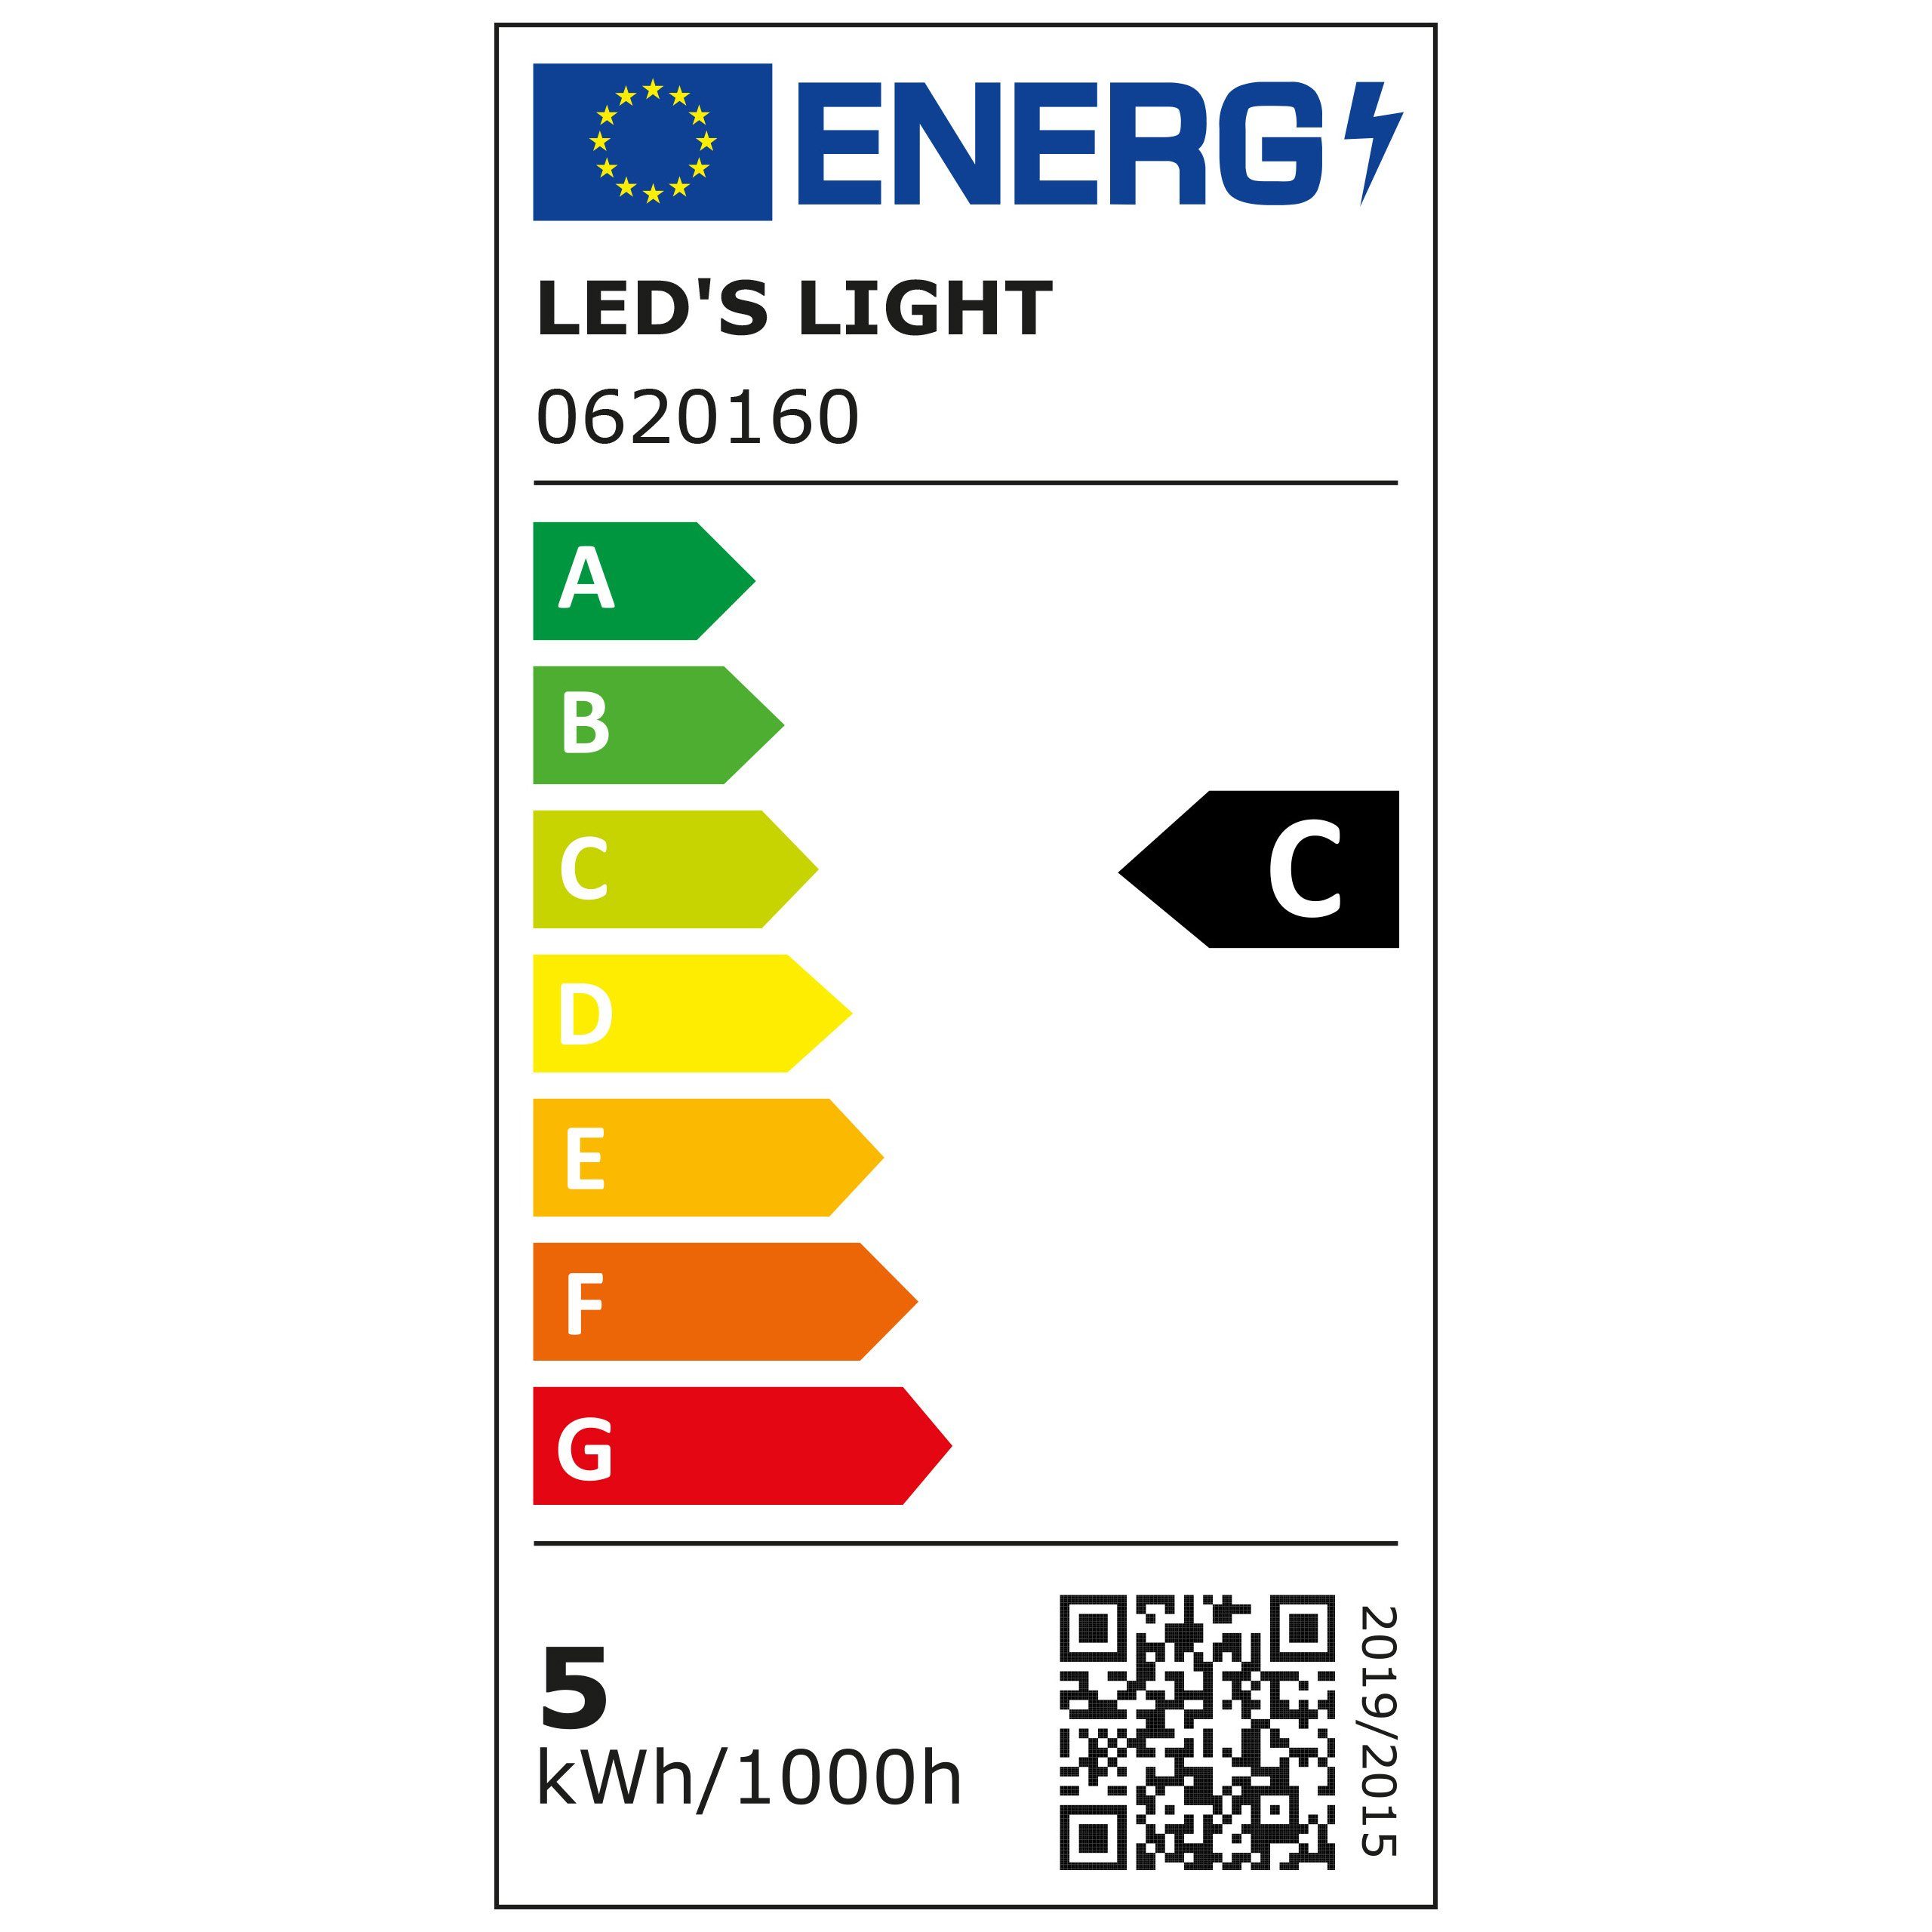 LED's light LED-Leuchtmittel E27, Haltbarkeit - LED warmweiß A60 4,9W Opal 50.000h Birne, E27 0620160